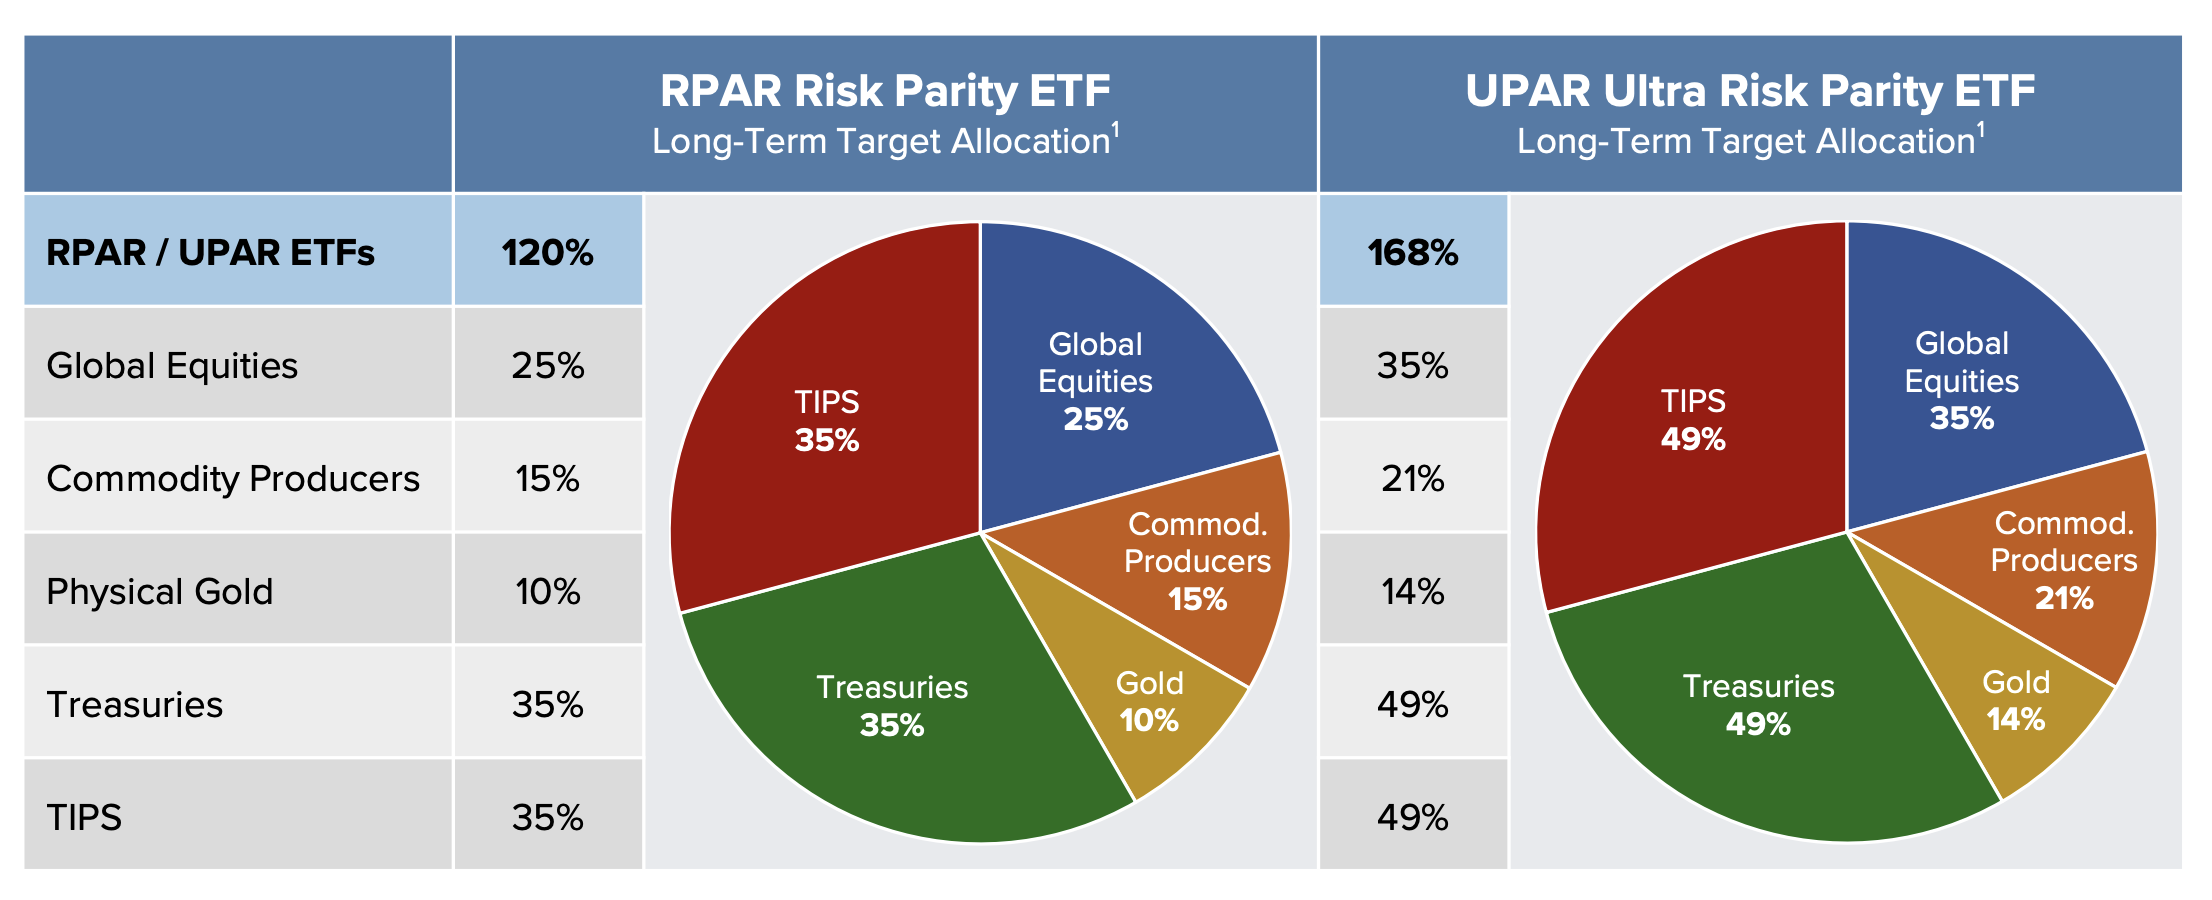 RPAR Risk Parity ETF vs UPAR Ultra Risk Parity ETF 